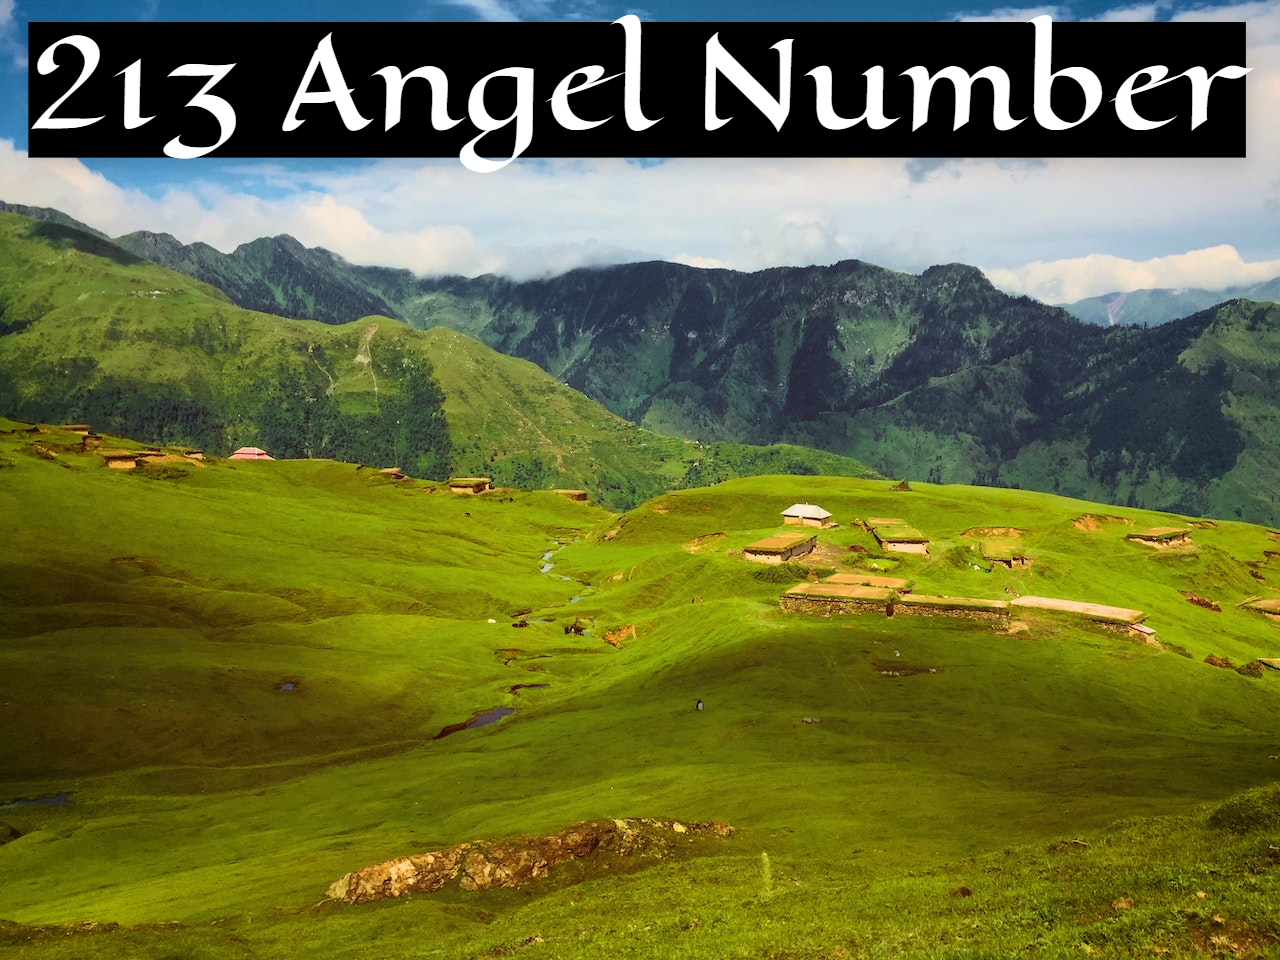 213 Angel Number Symbolizes Progress, Determination, And Creativity